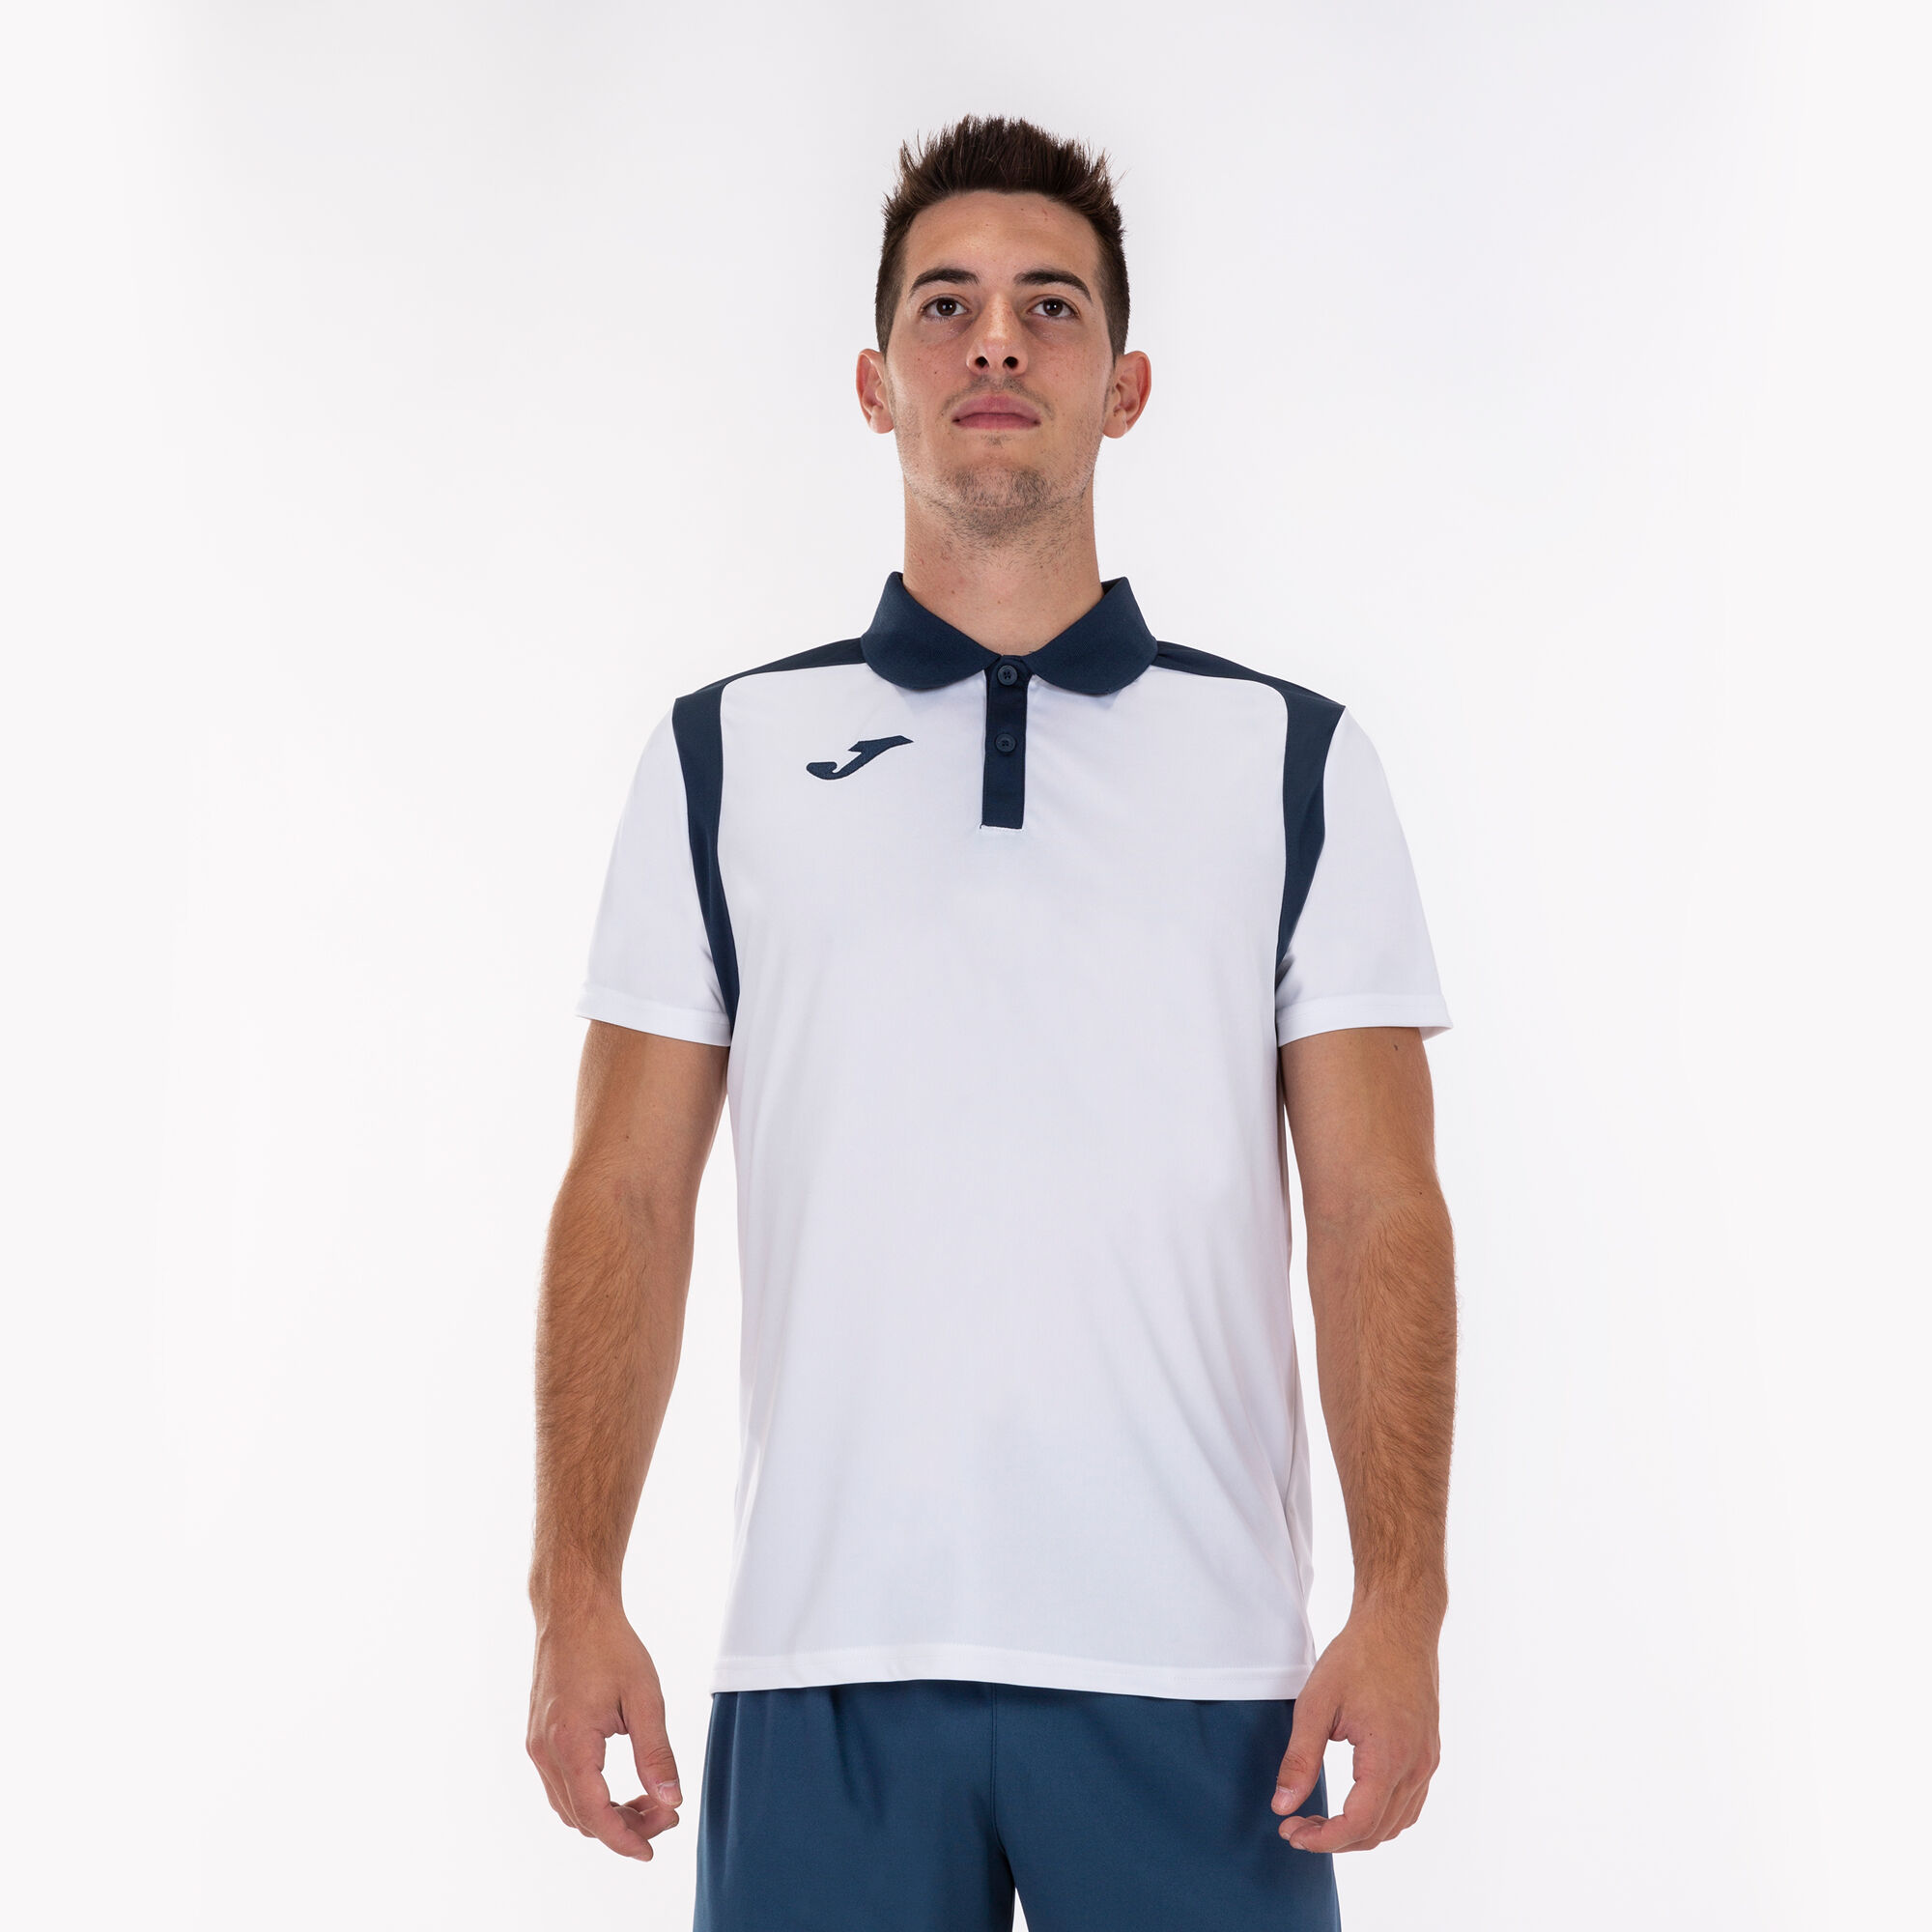 Polo shirt short-sleeve man Championship V white navy blue